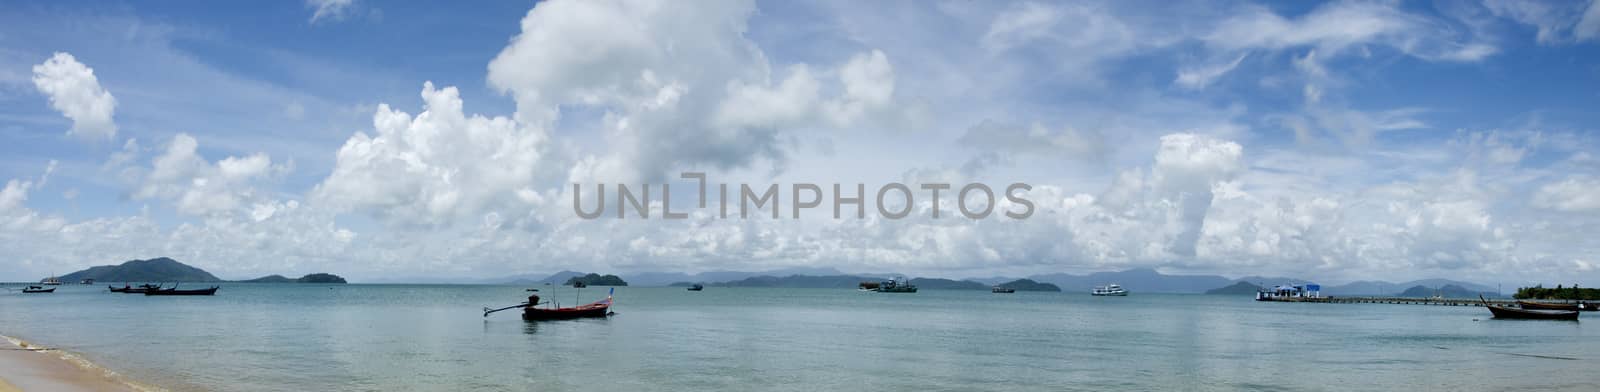 Panorama view at Pha Yam island, Thailand by pixbox77